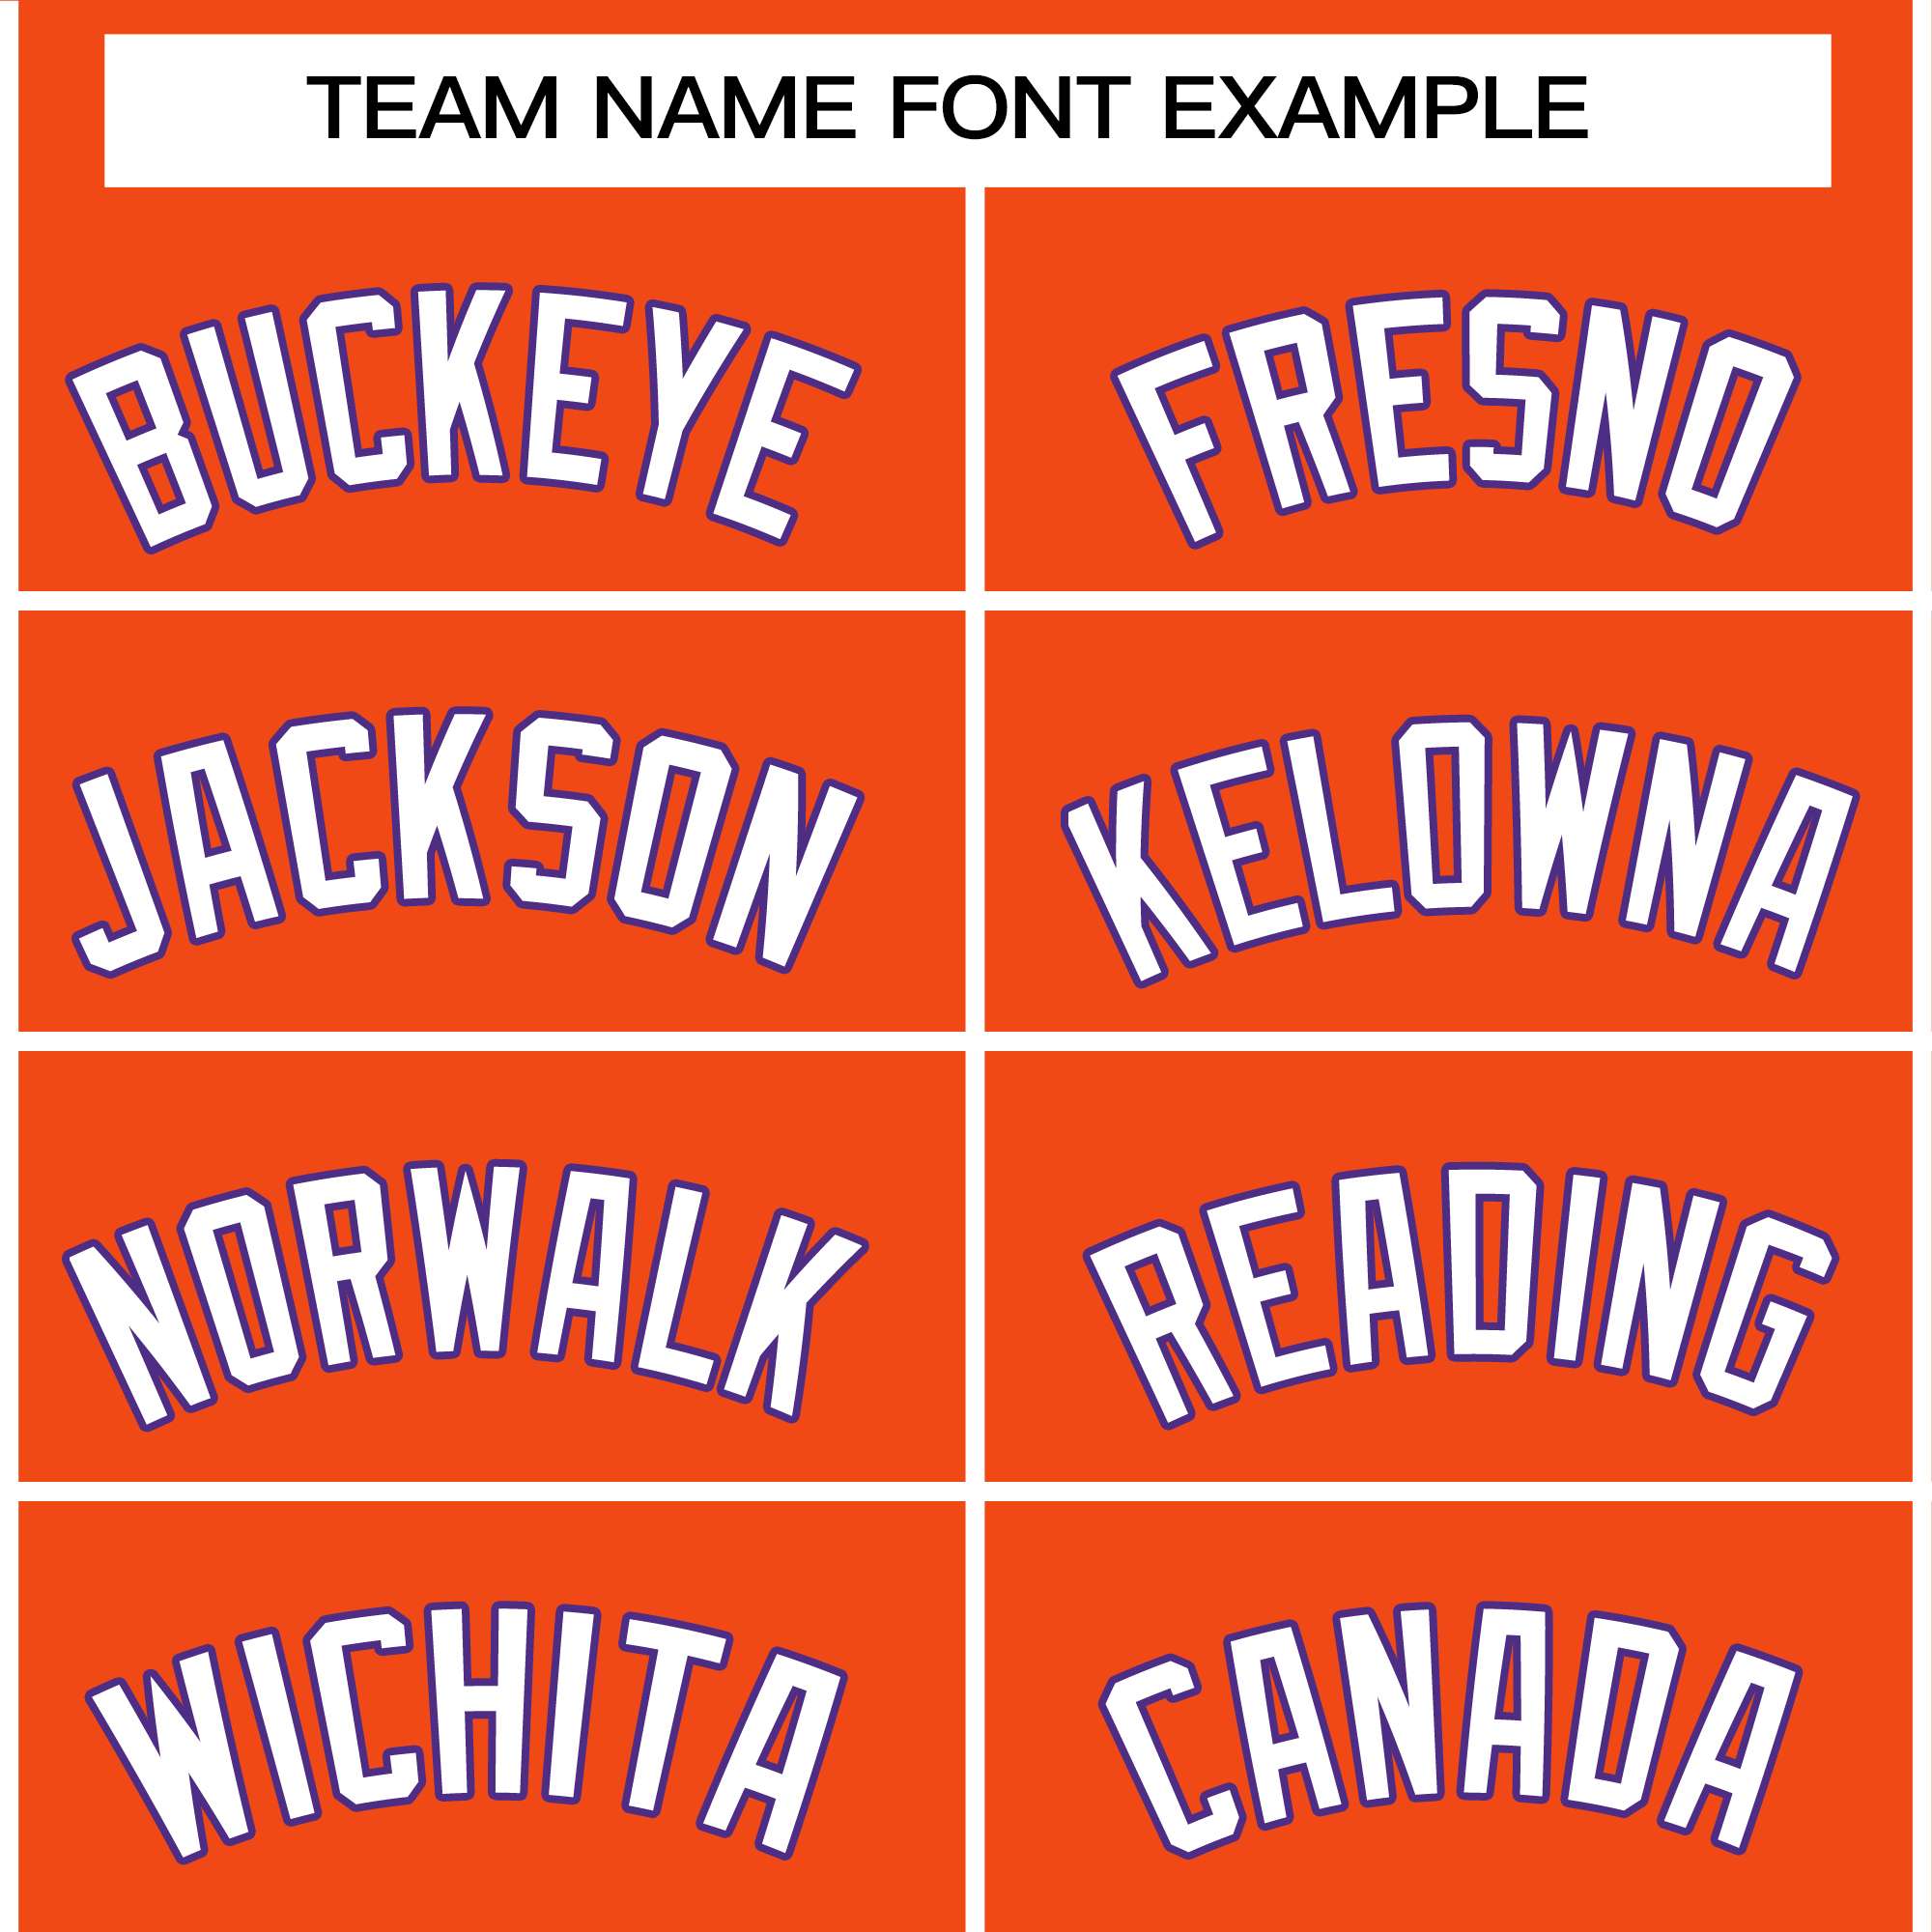 custom basketball uniforms team name font example